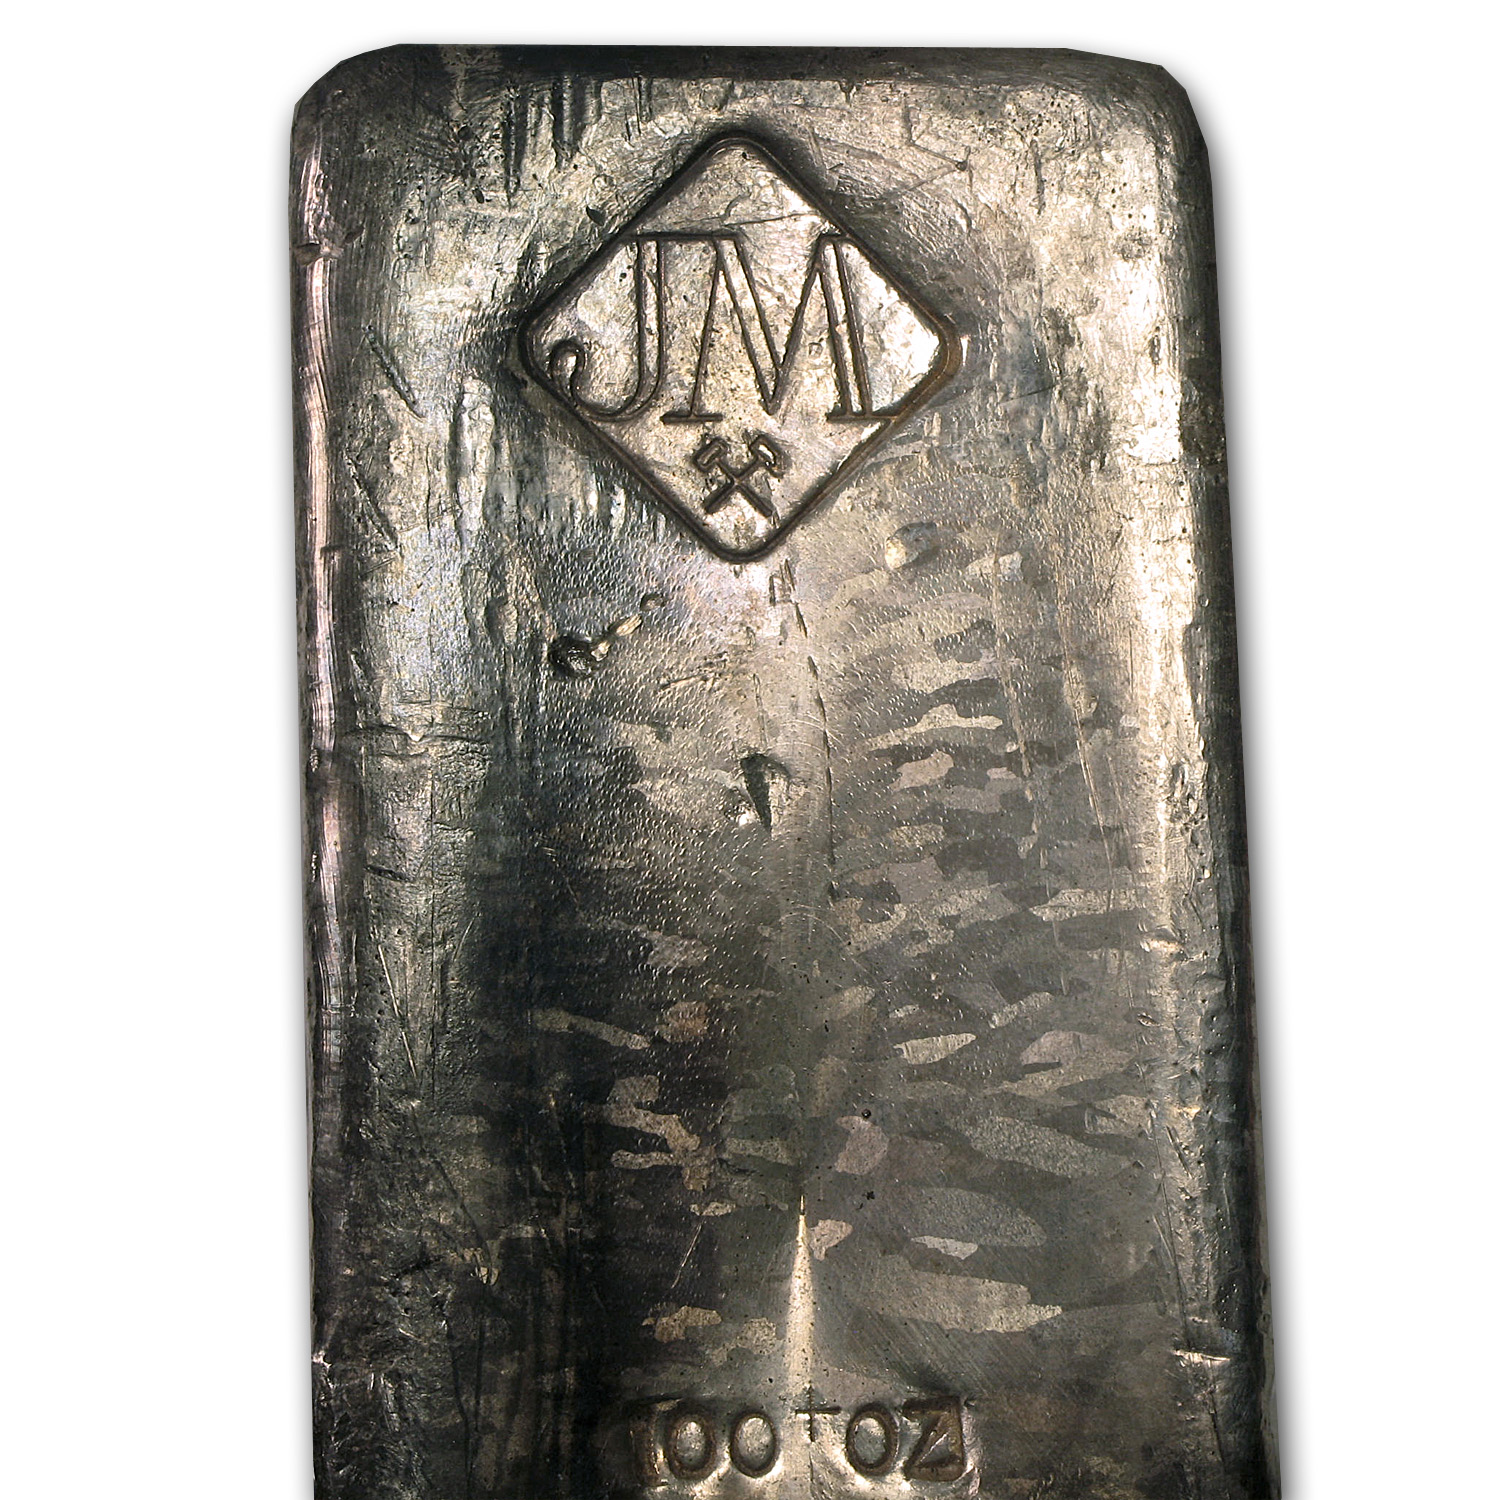 johnson matthey 10 oz silver bar serial number